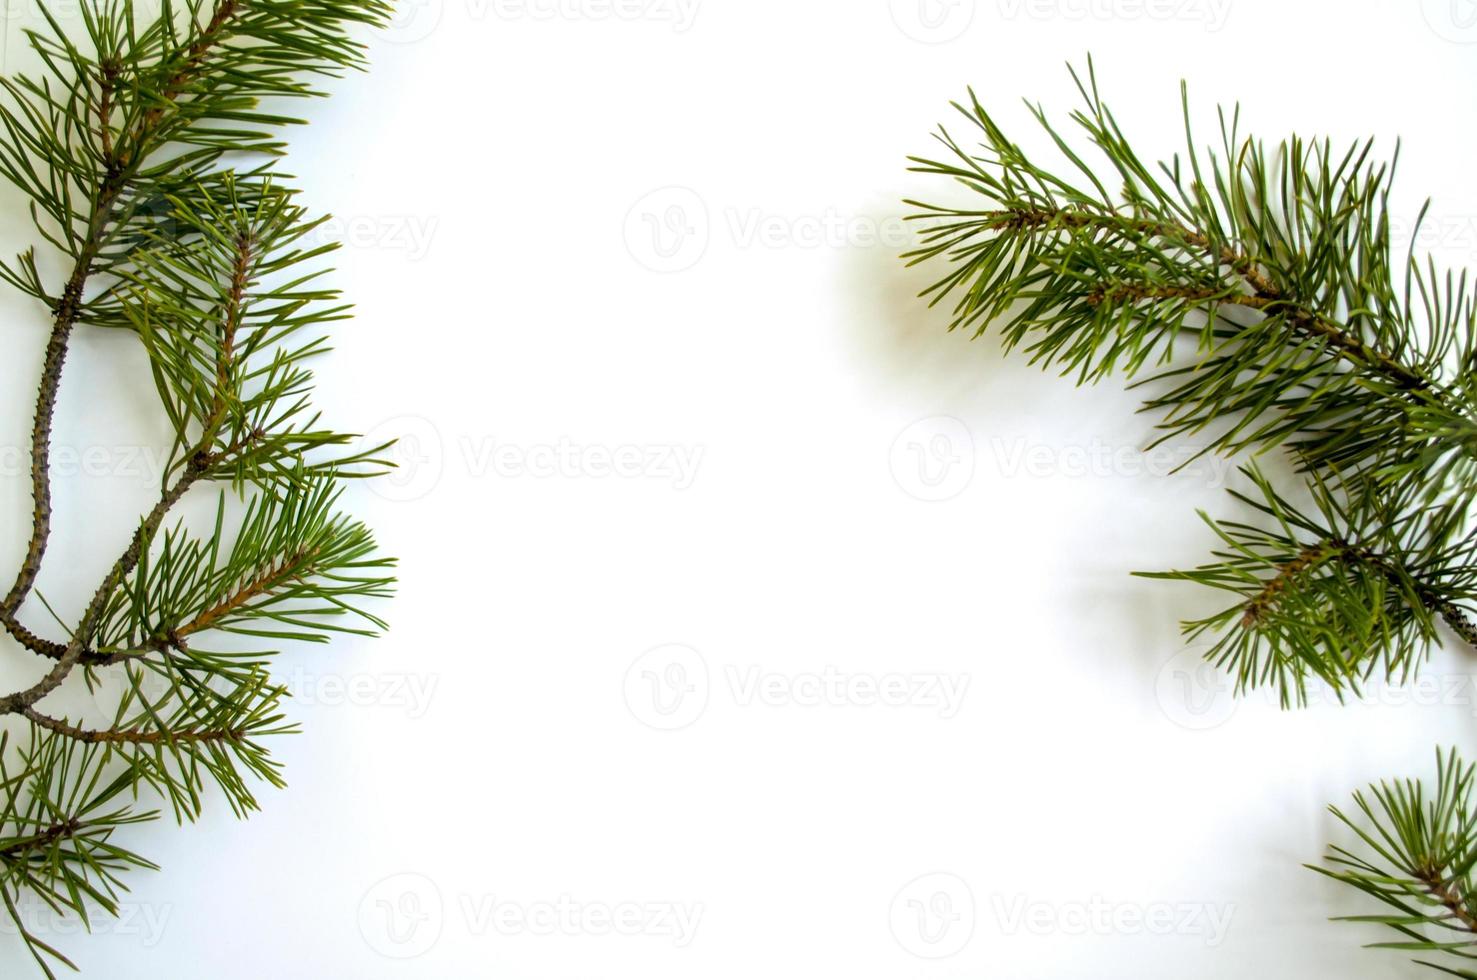 Natale albero rami su un' bianca sfondo foto